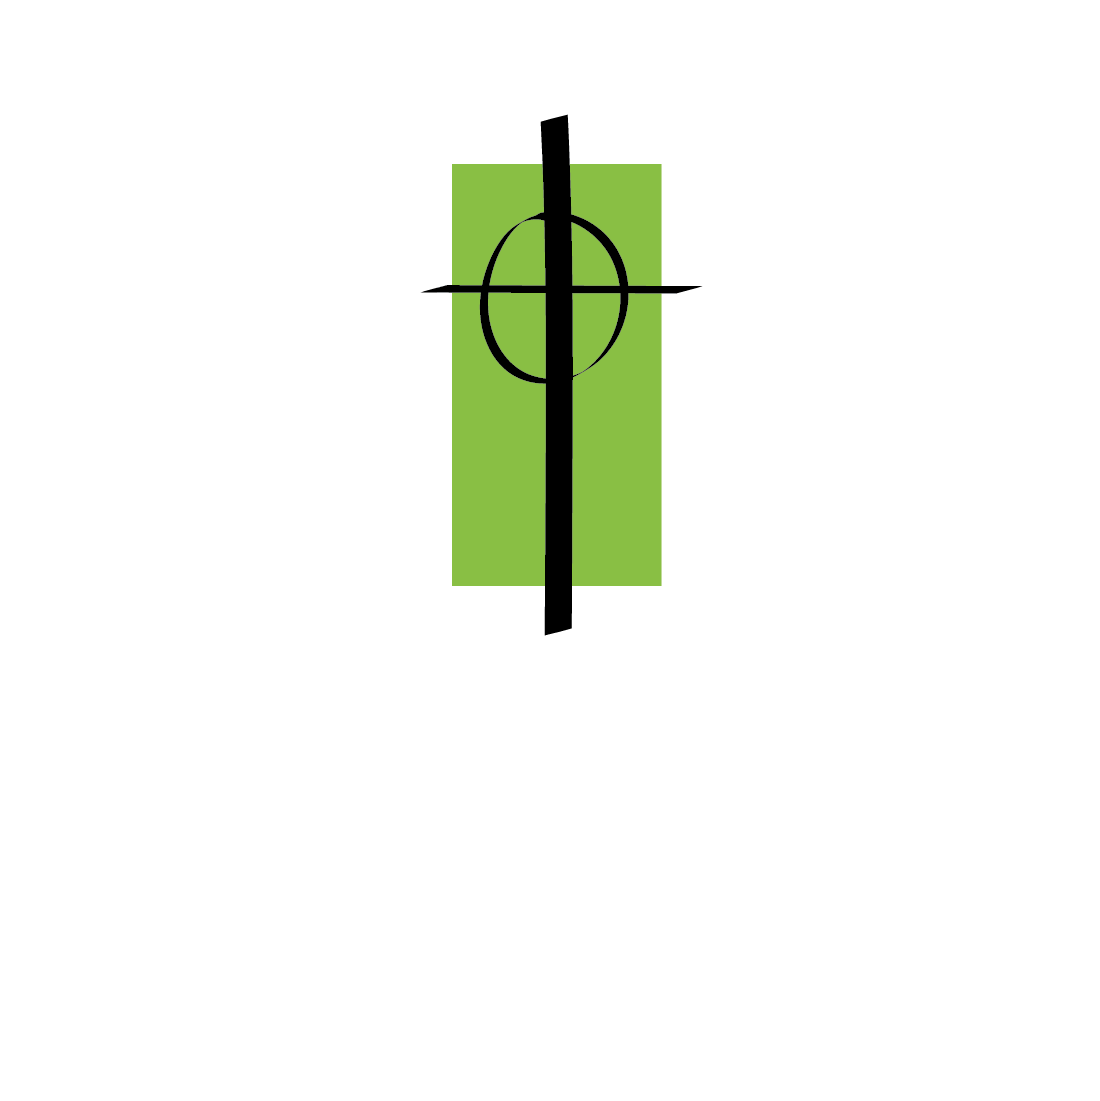 Evangel Presbyterian Church (PCA)